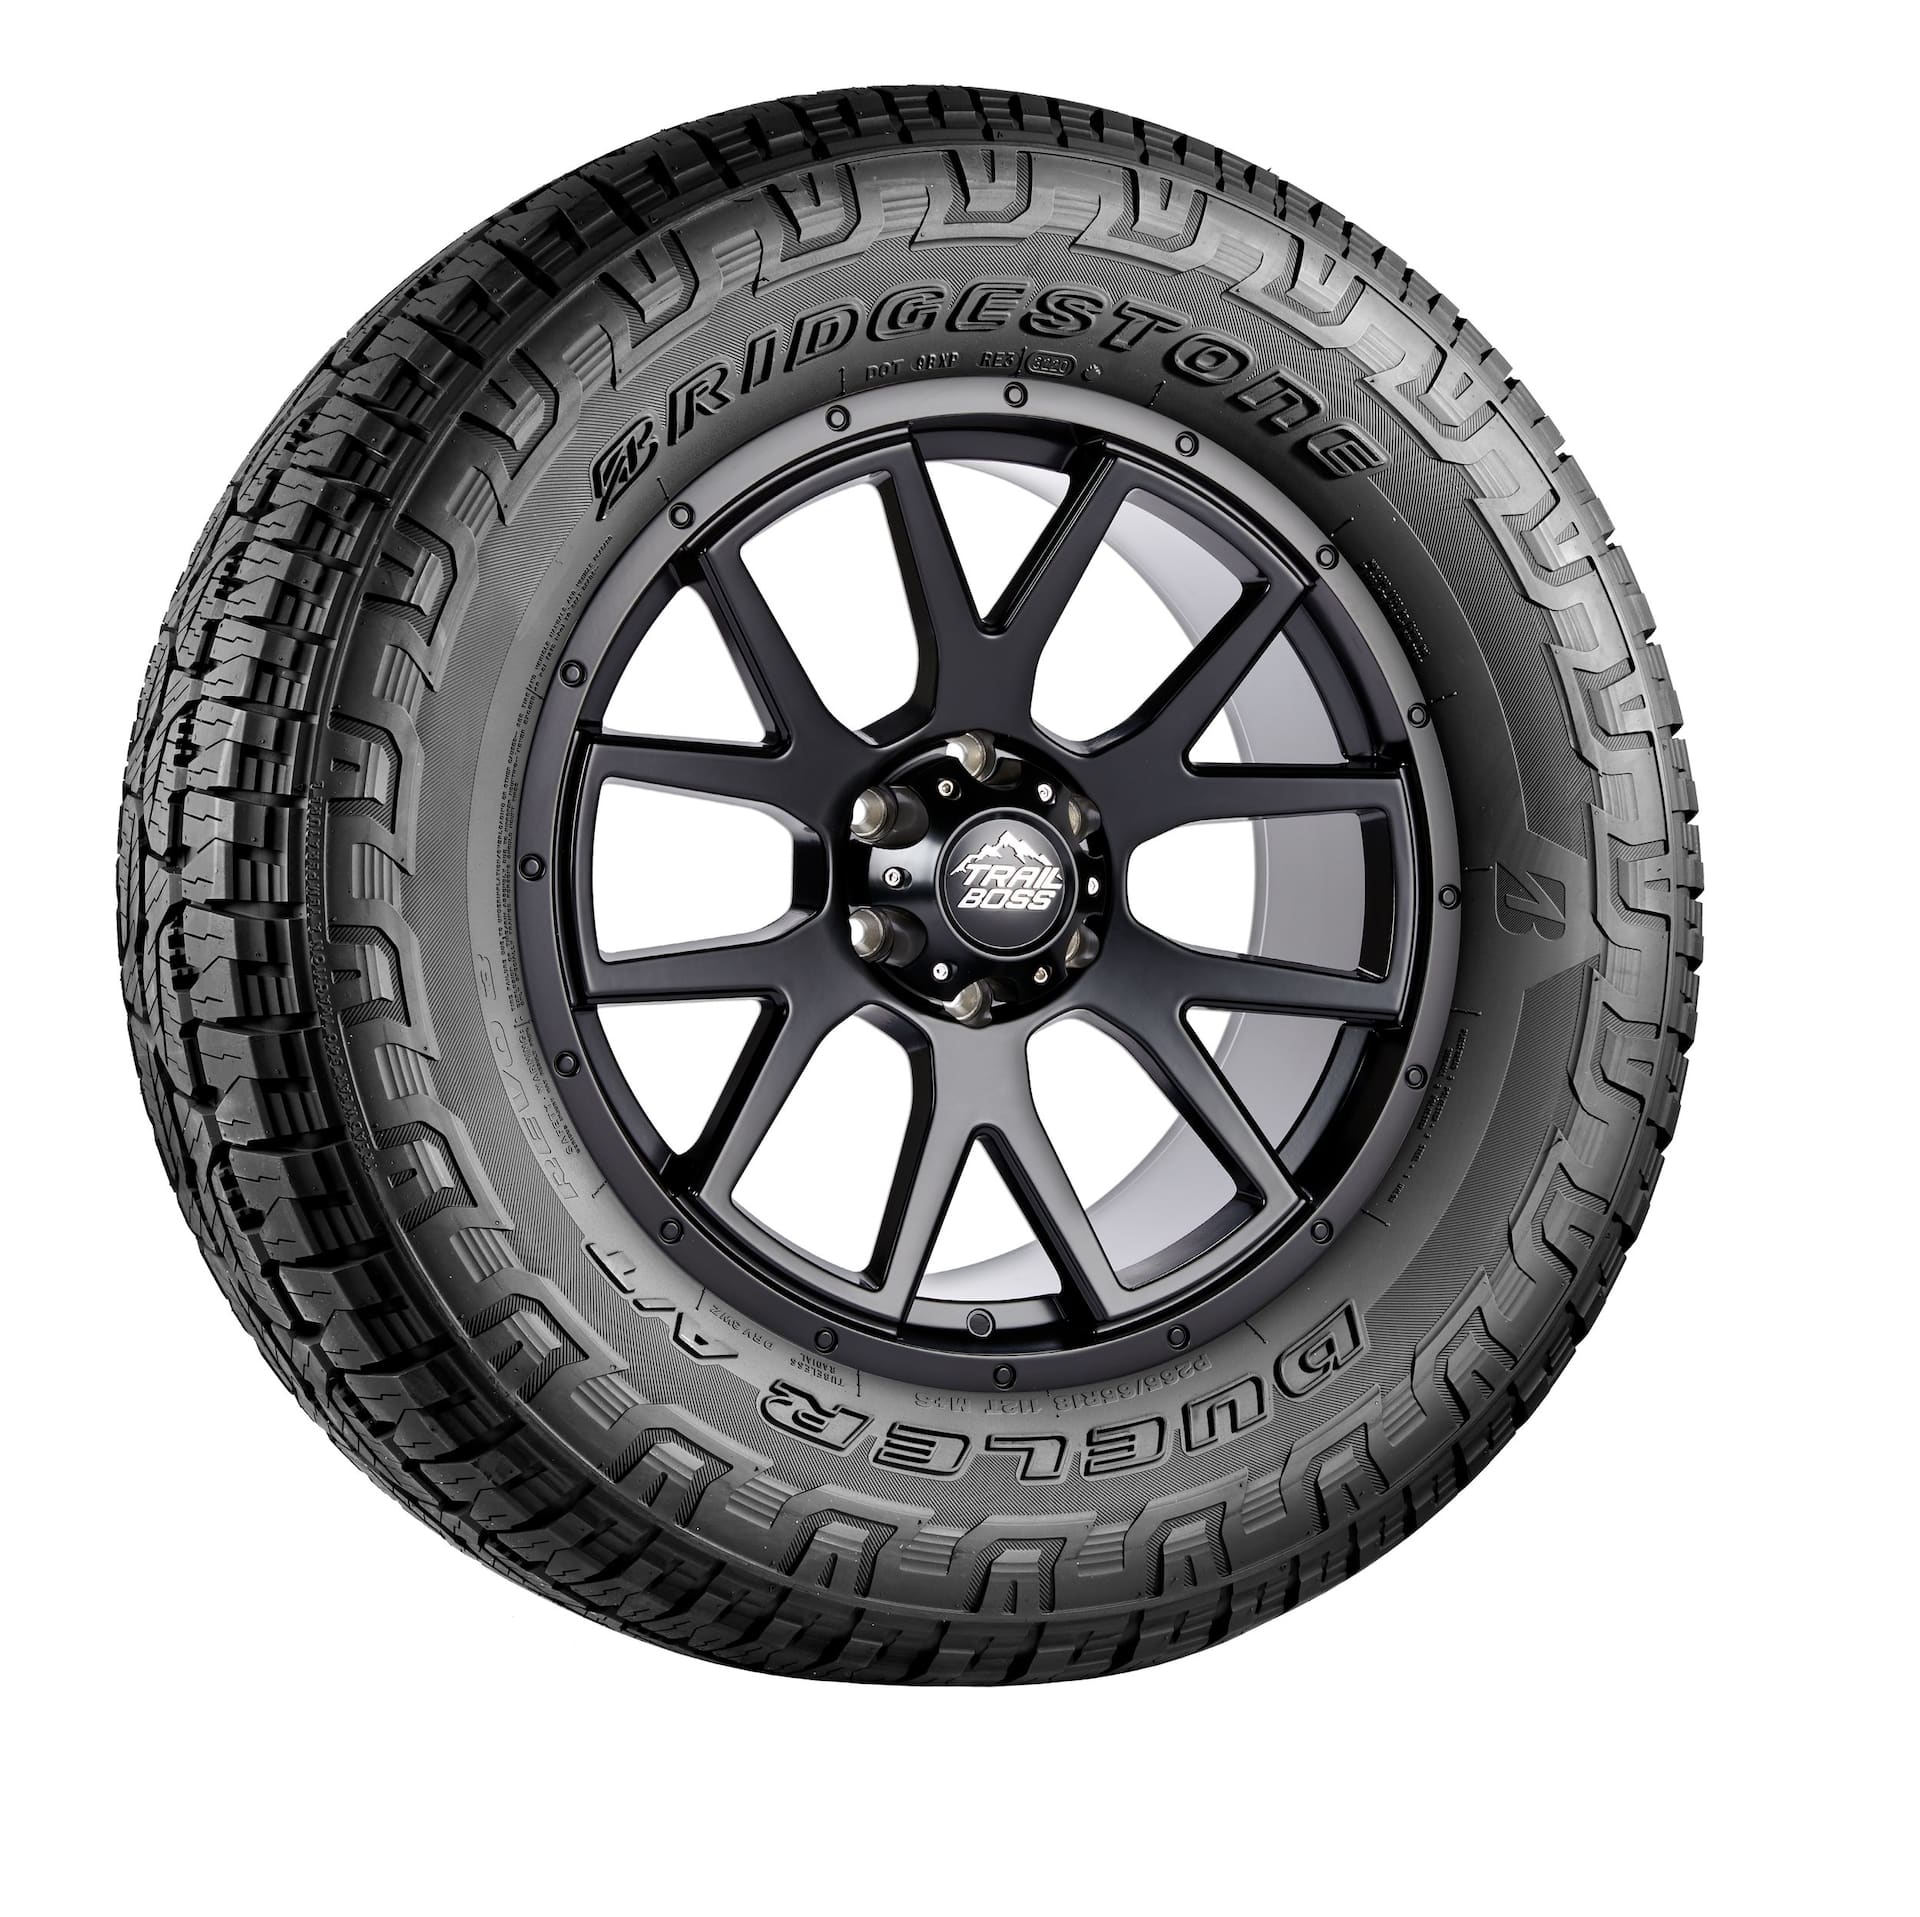 Bridgestone Dueler A/T REVO 3 All Terrain Tire For Truck & SUV